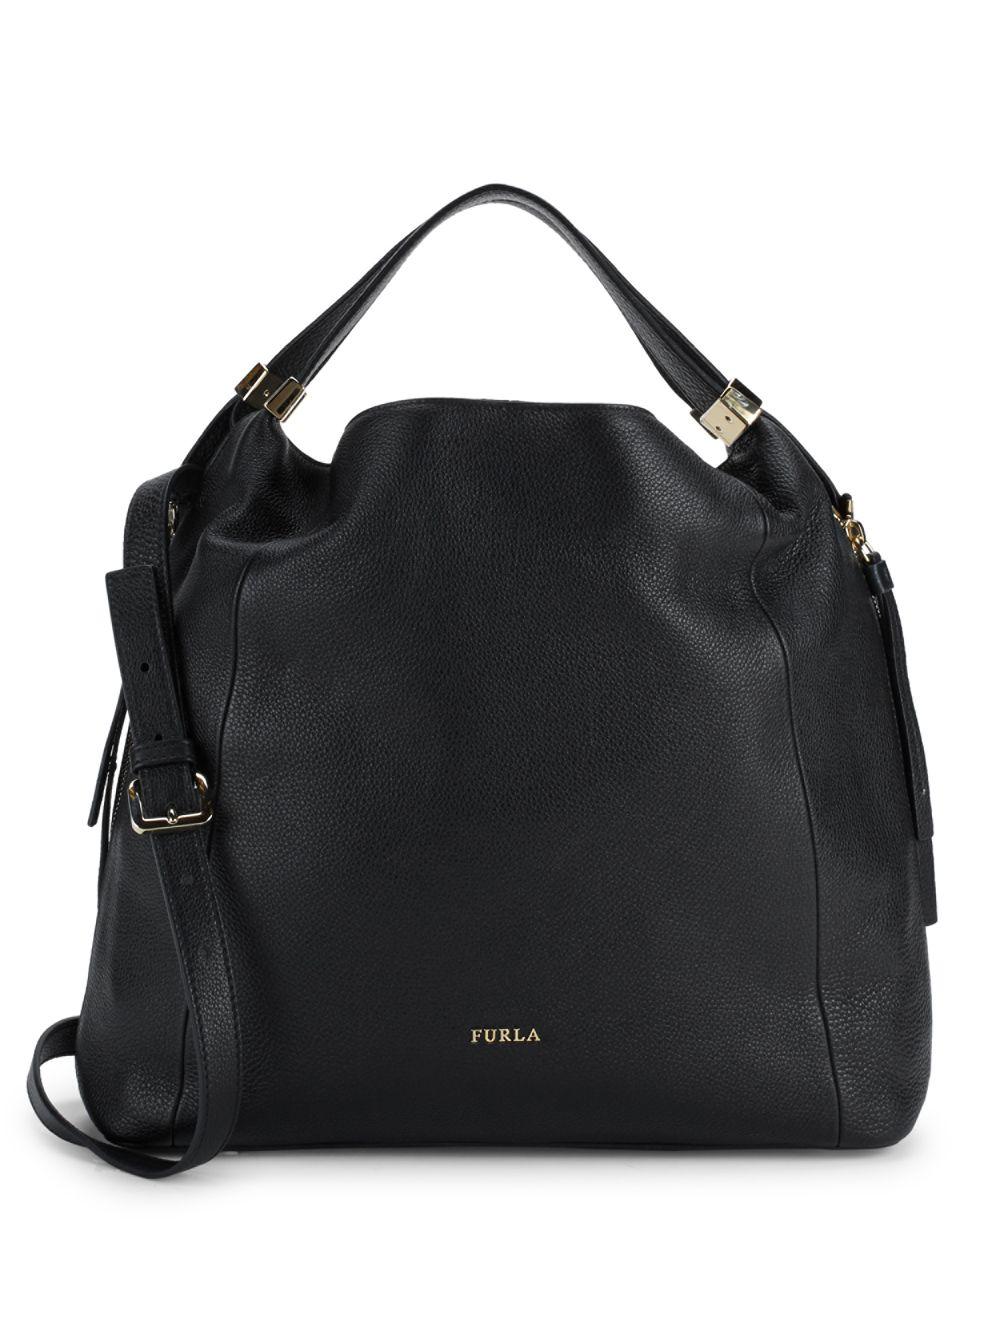 Furla Liz Leather Hobo Bag in Black | Lyst